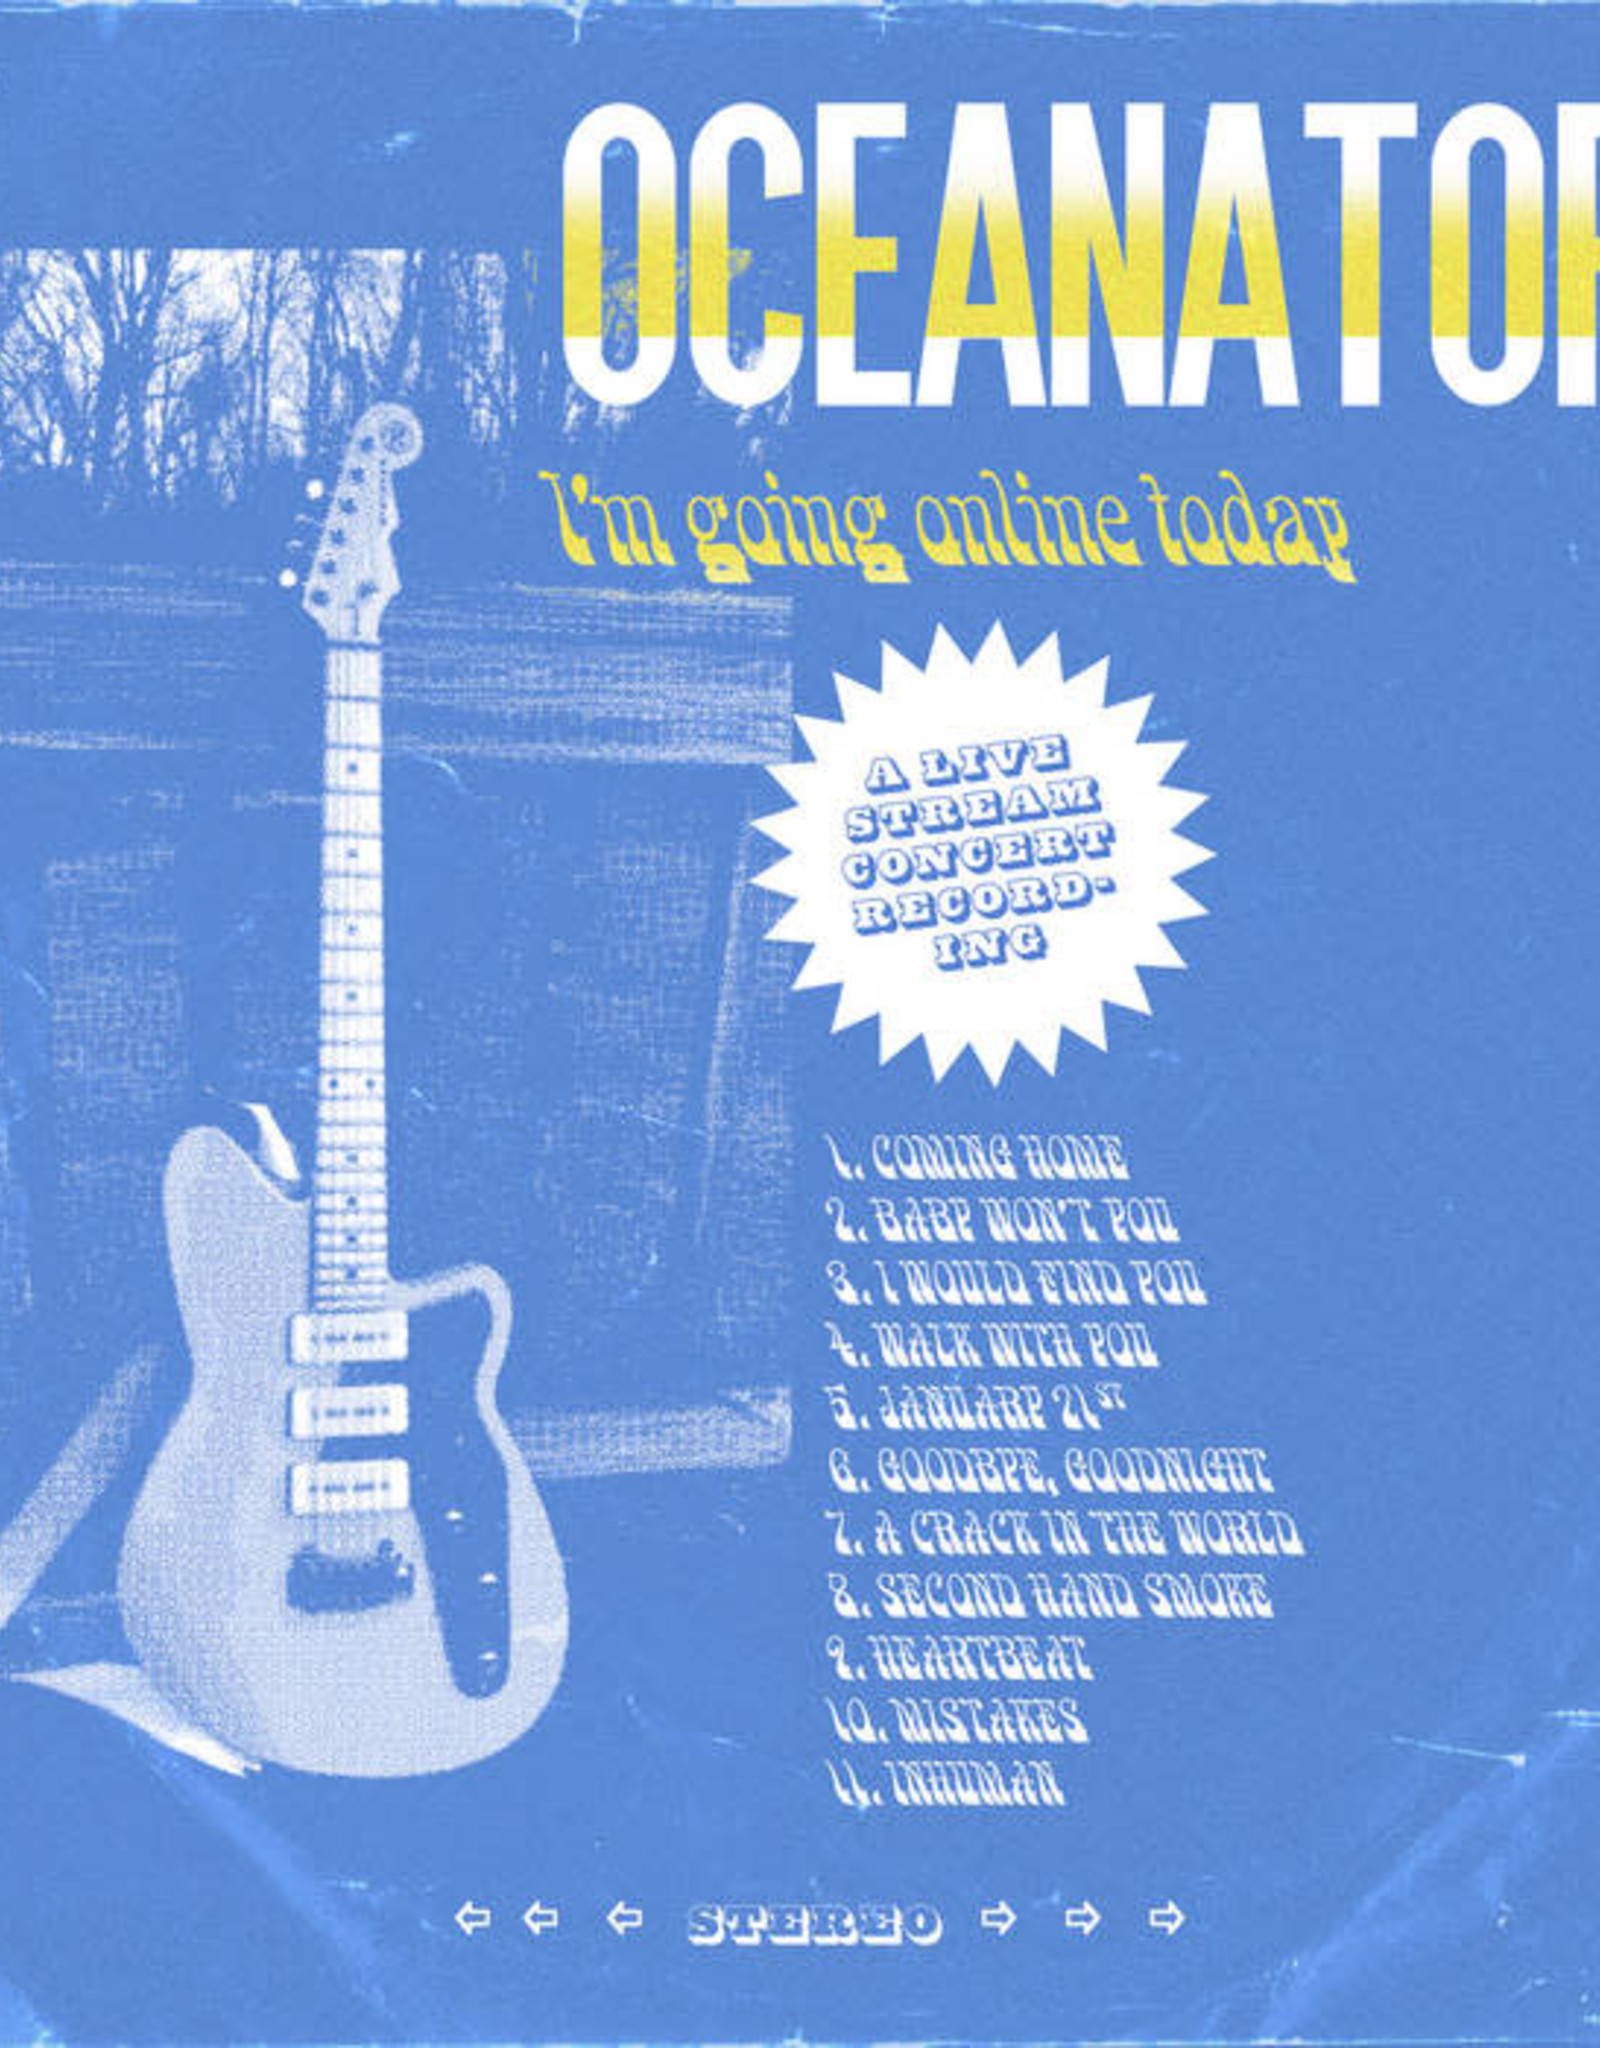 Oceanator - I'm Going Online Today: A Livestream Concert Recording